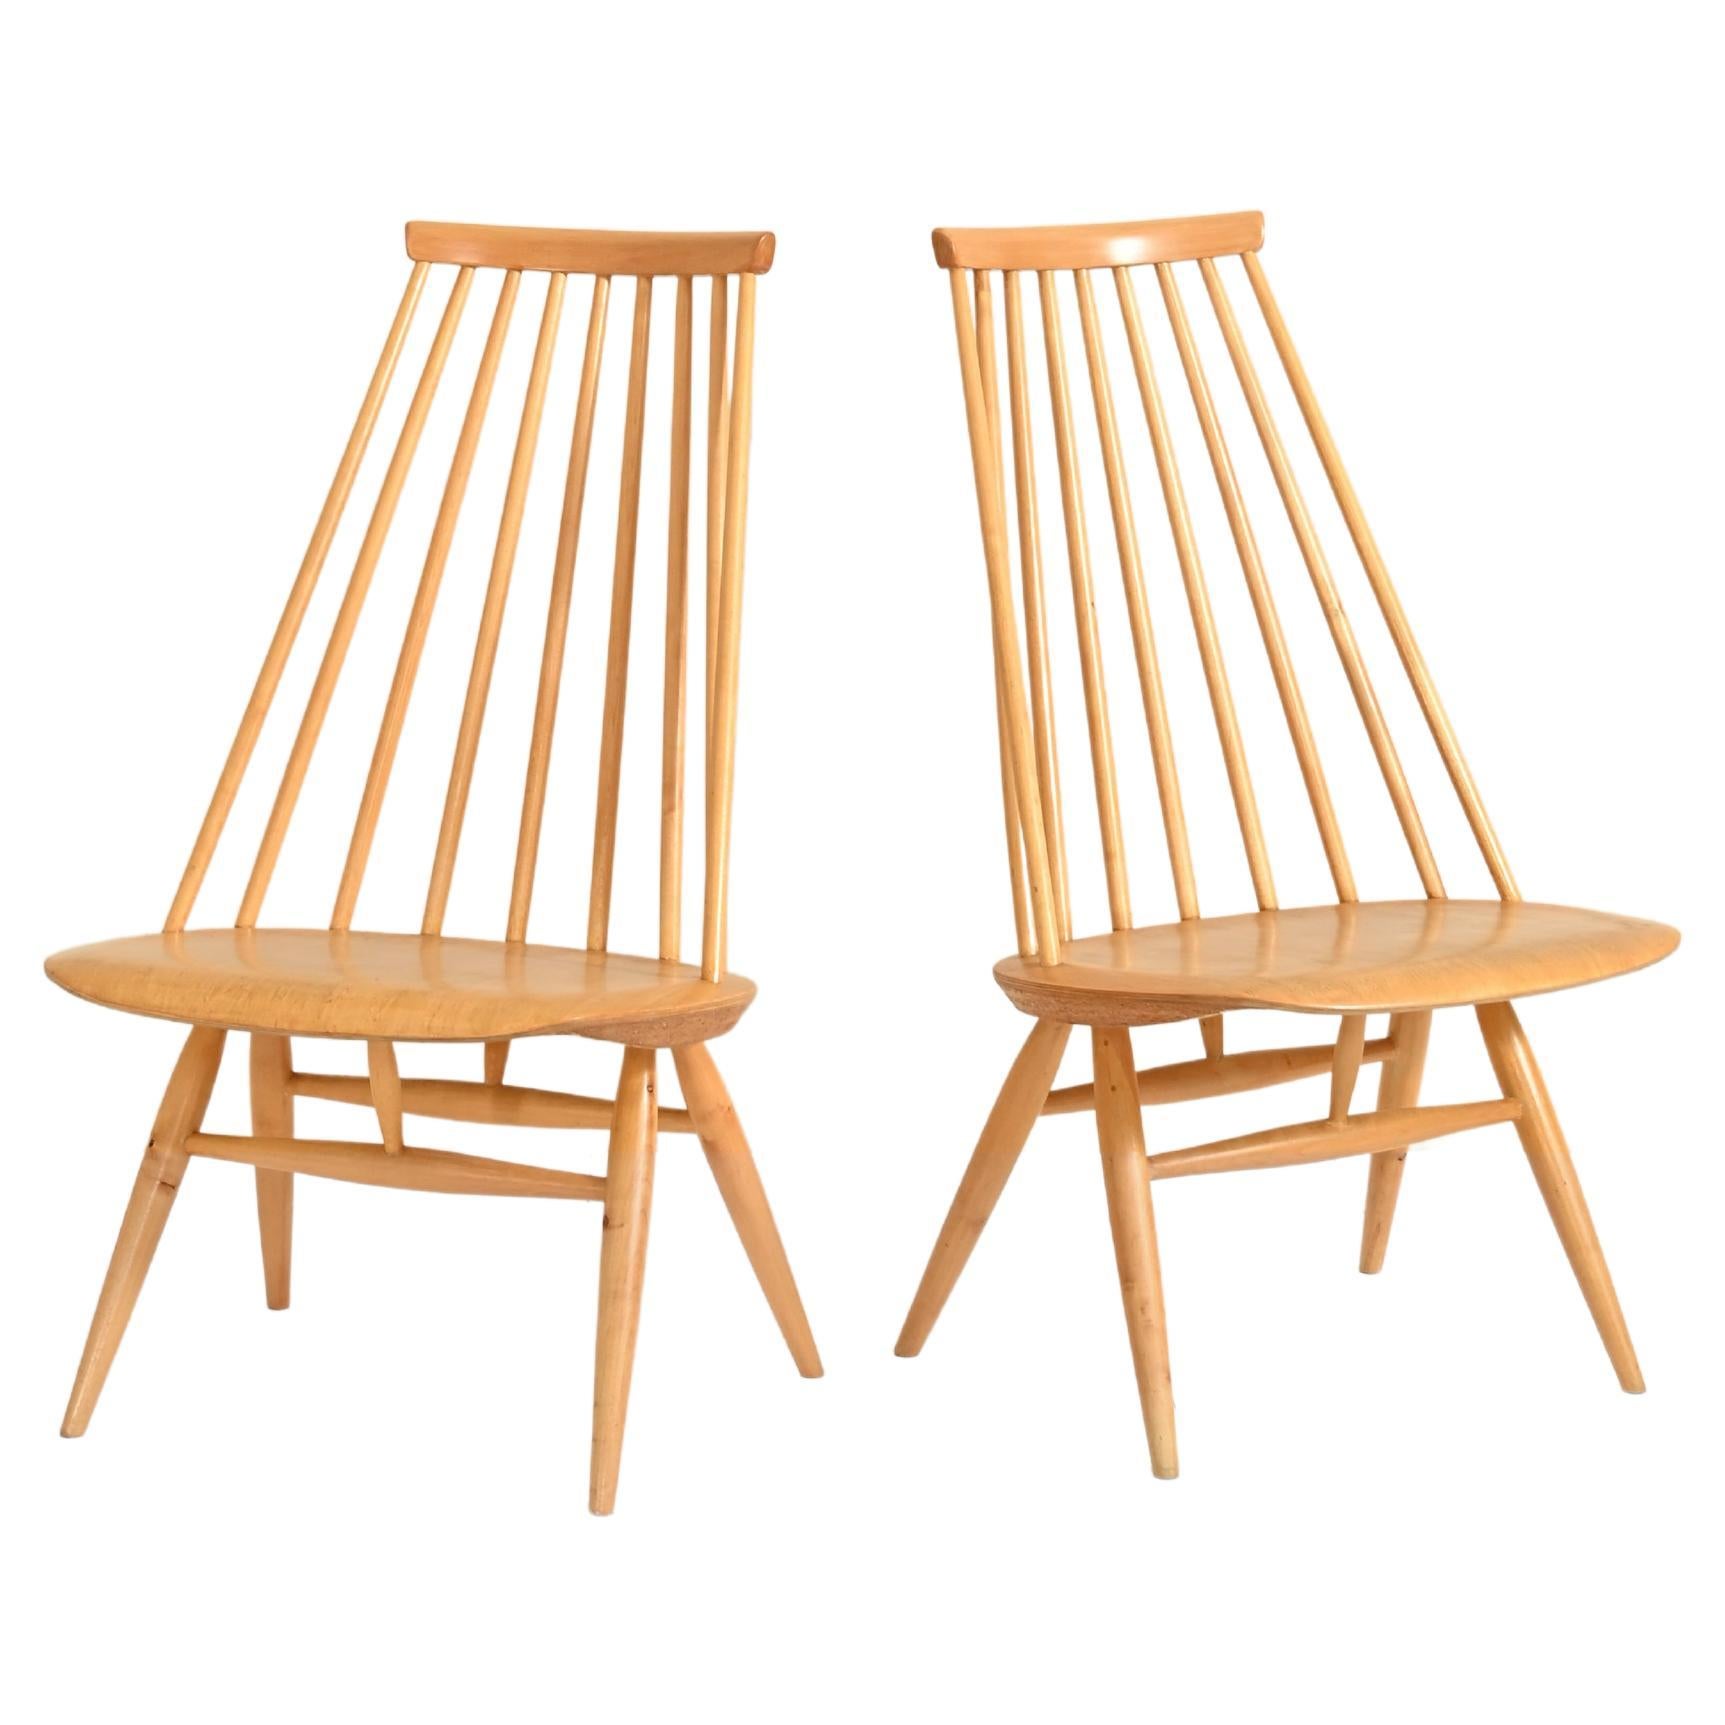 Mademoiselle chairs by Ilamari Tapiovaara For Sale